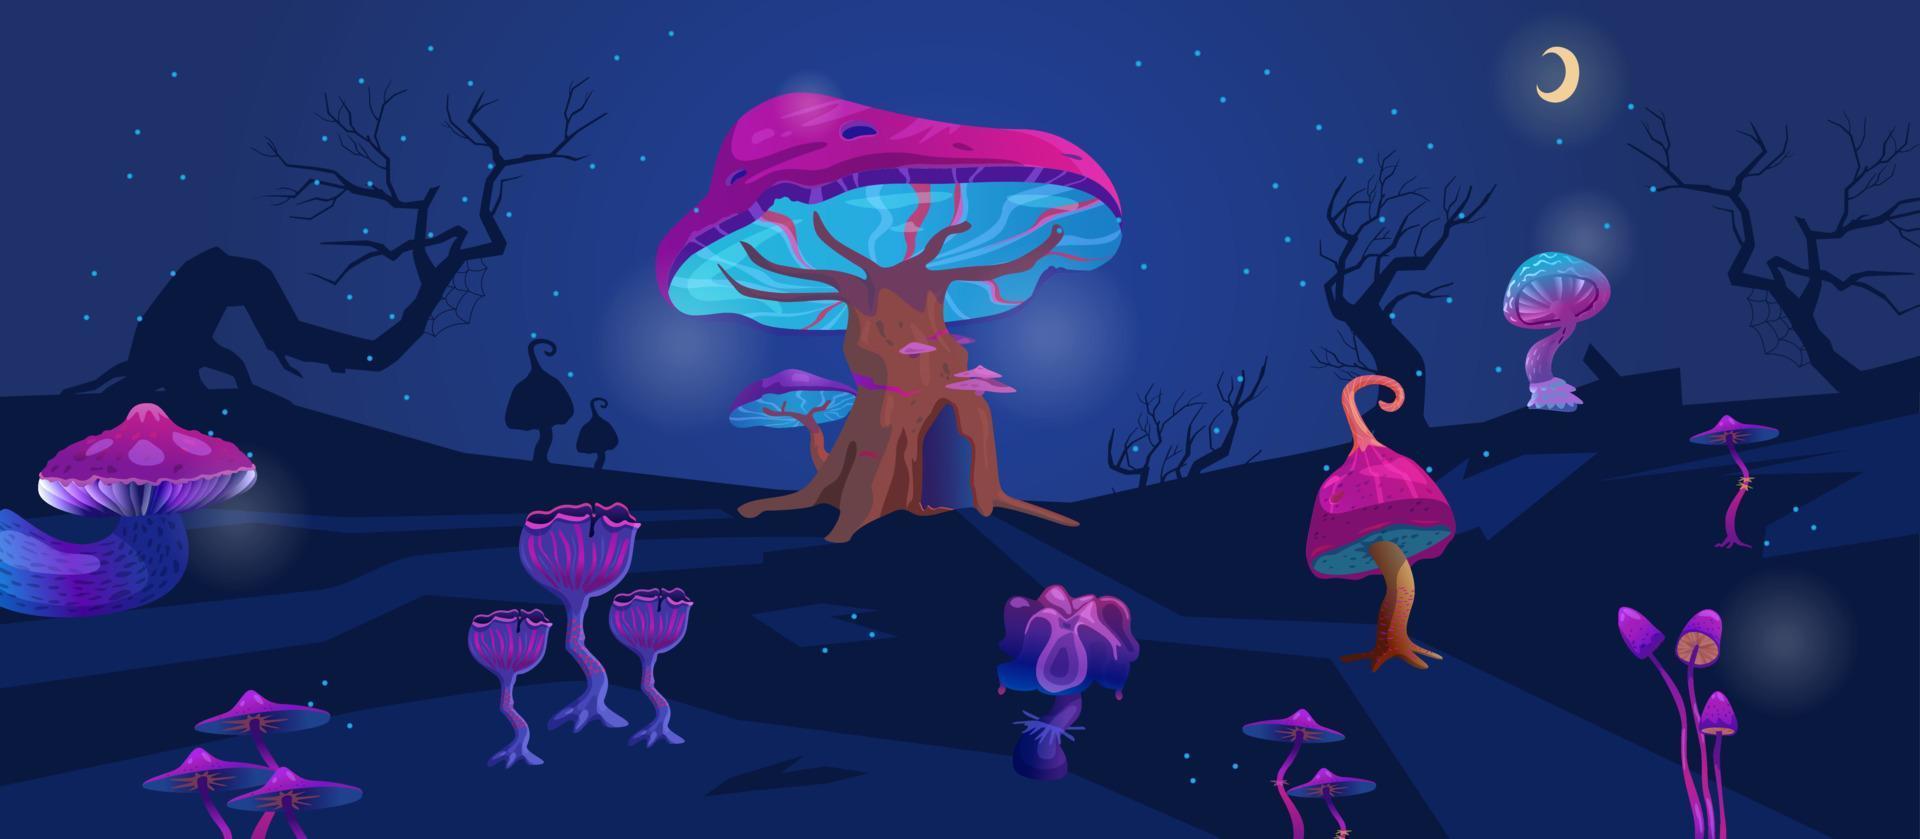 noche paisaje con magia brillante hongos dibujos animados vector ilustración. juego de azar antecedentes.